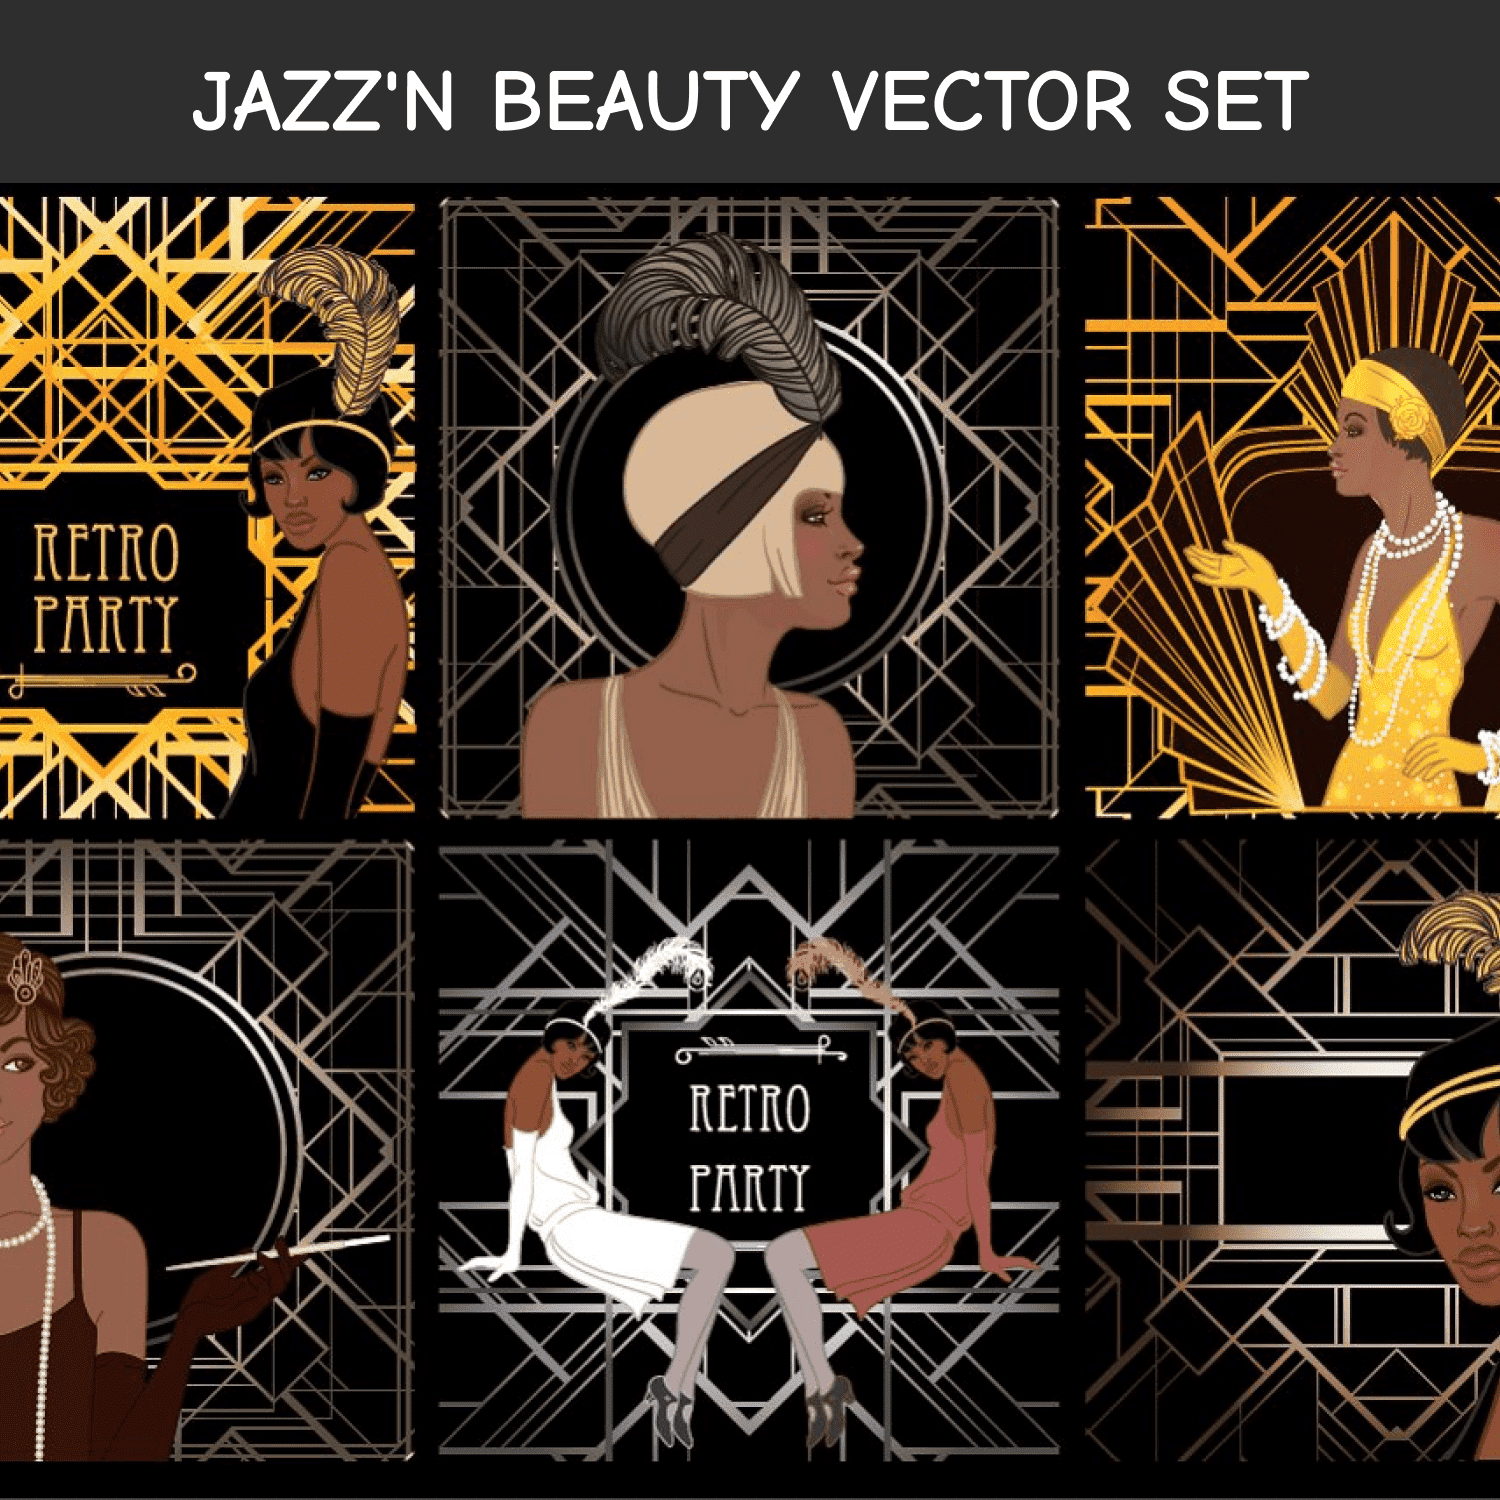 jazzn beauty vector set cover image.